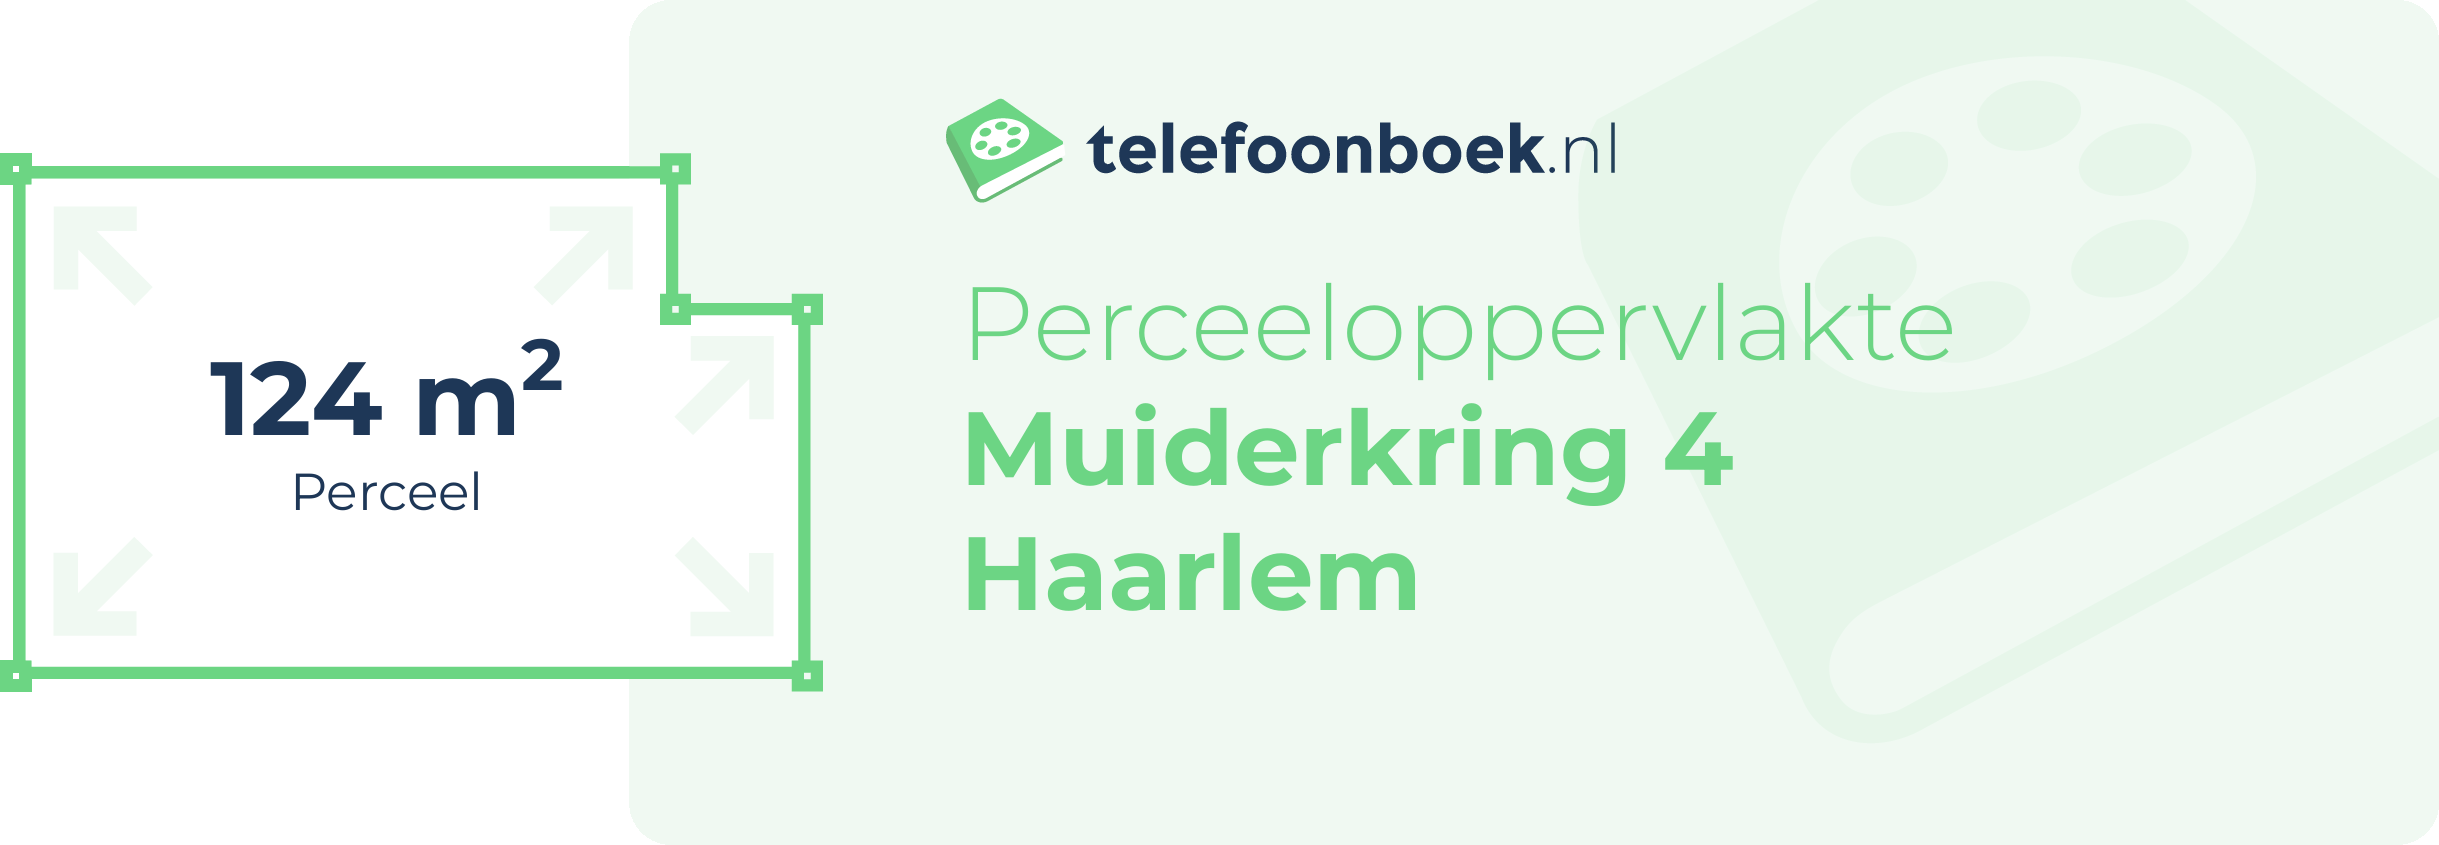 Perceeloppervlakte Muiderkring 4 Haarlem